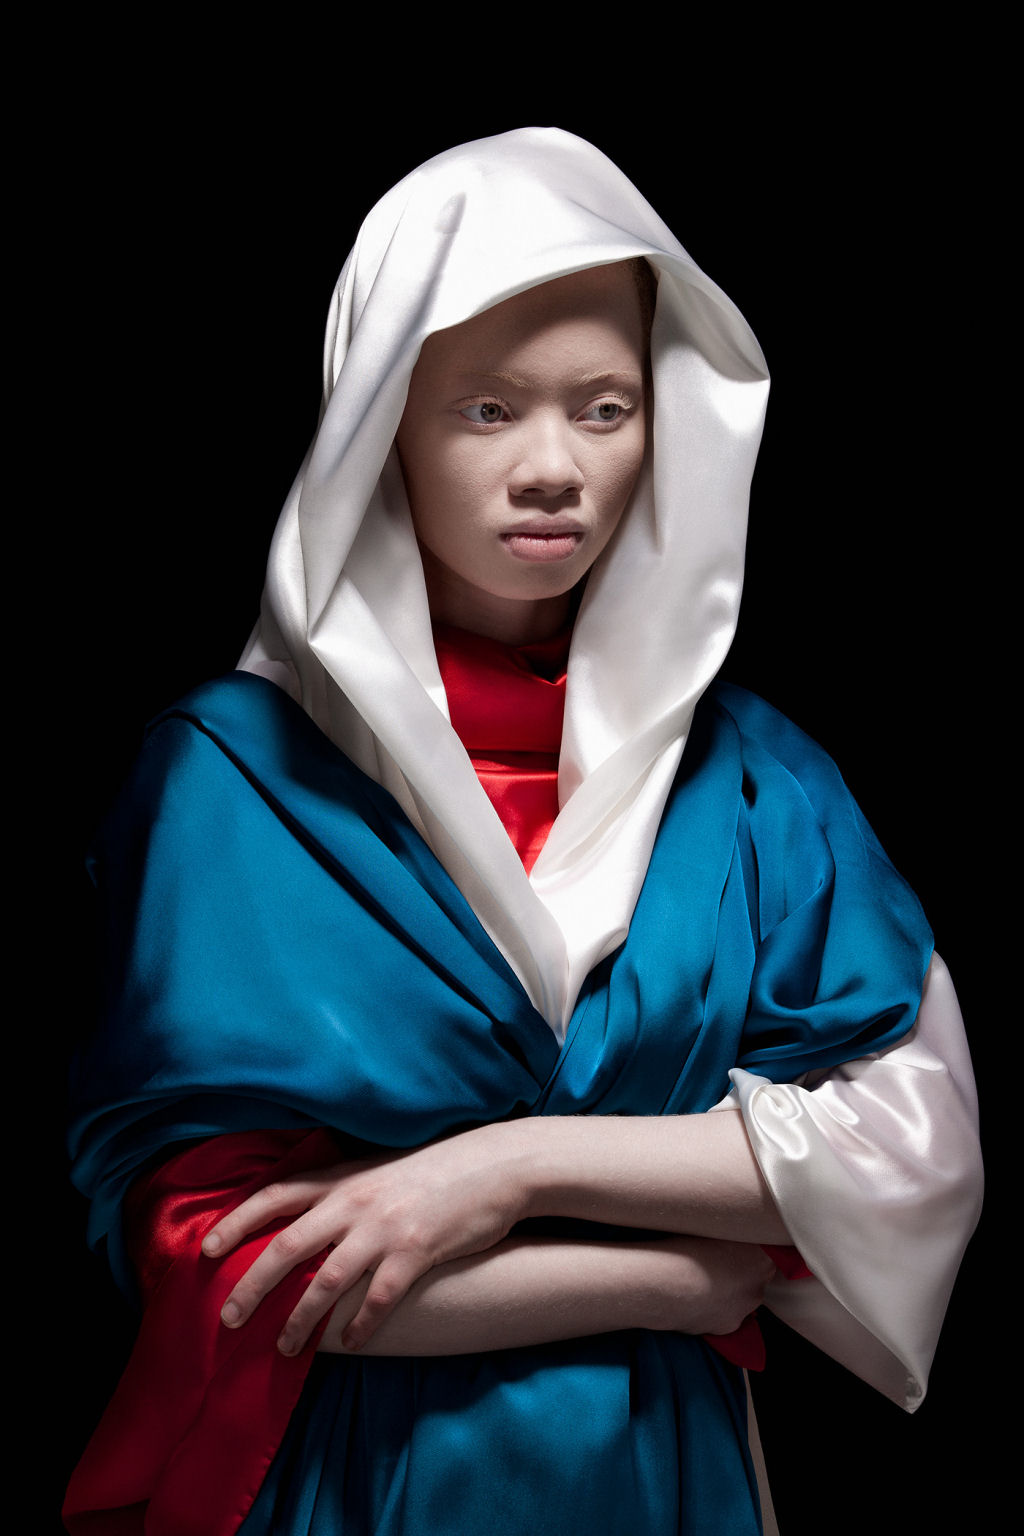 Fotgrafo desafia padres da beleza com modelos albinos 06